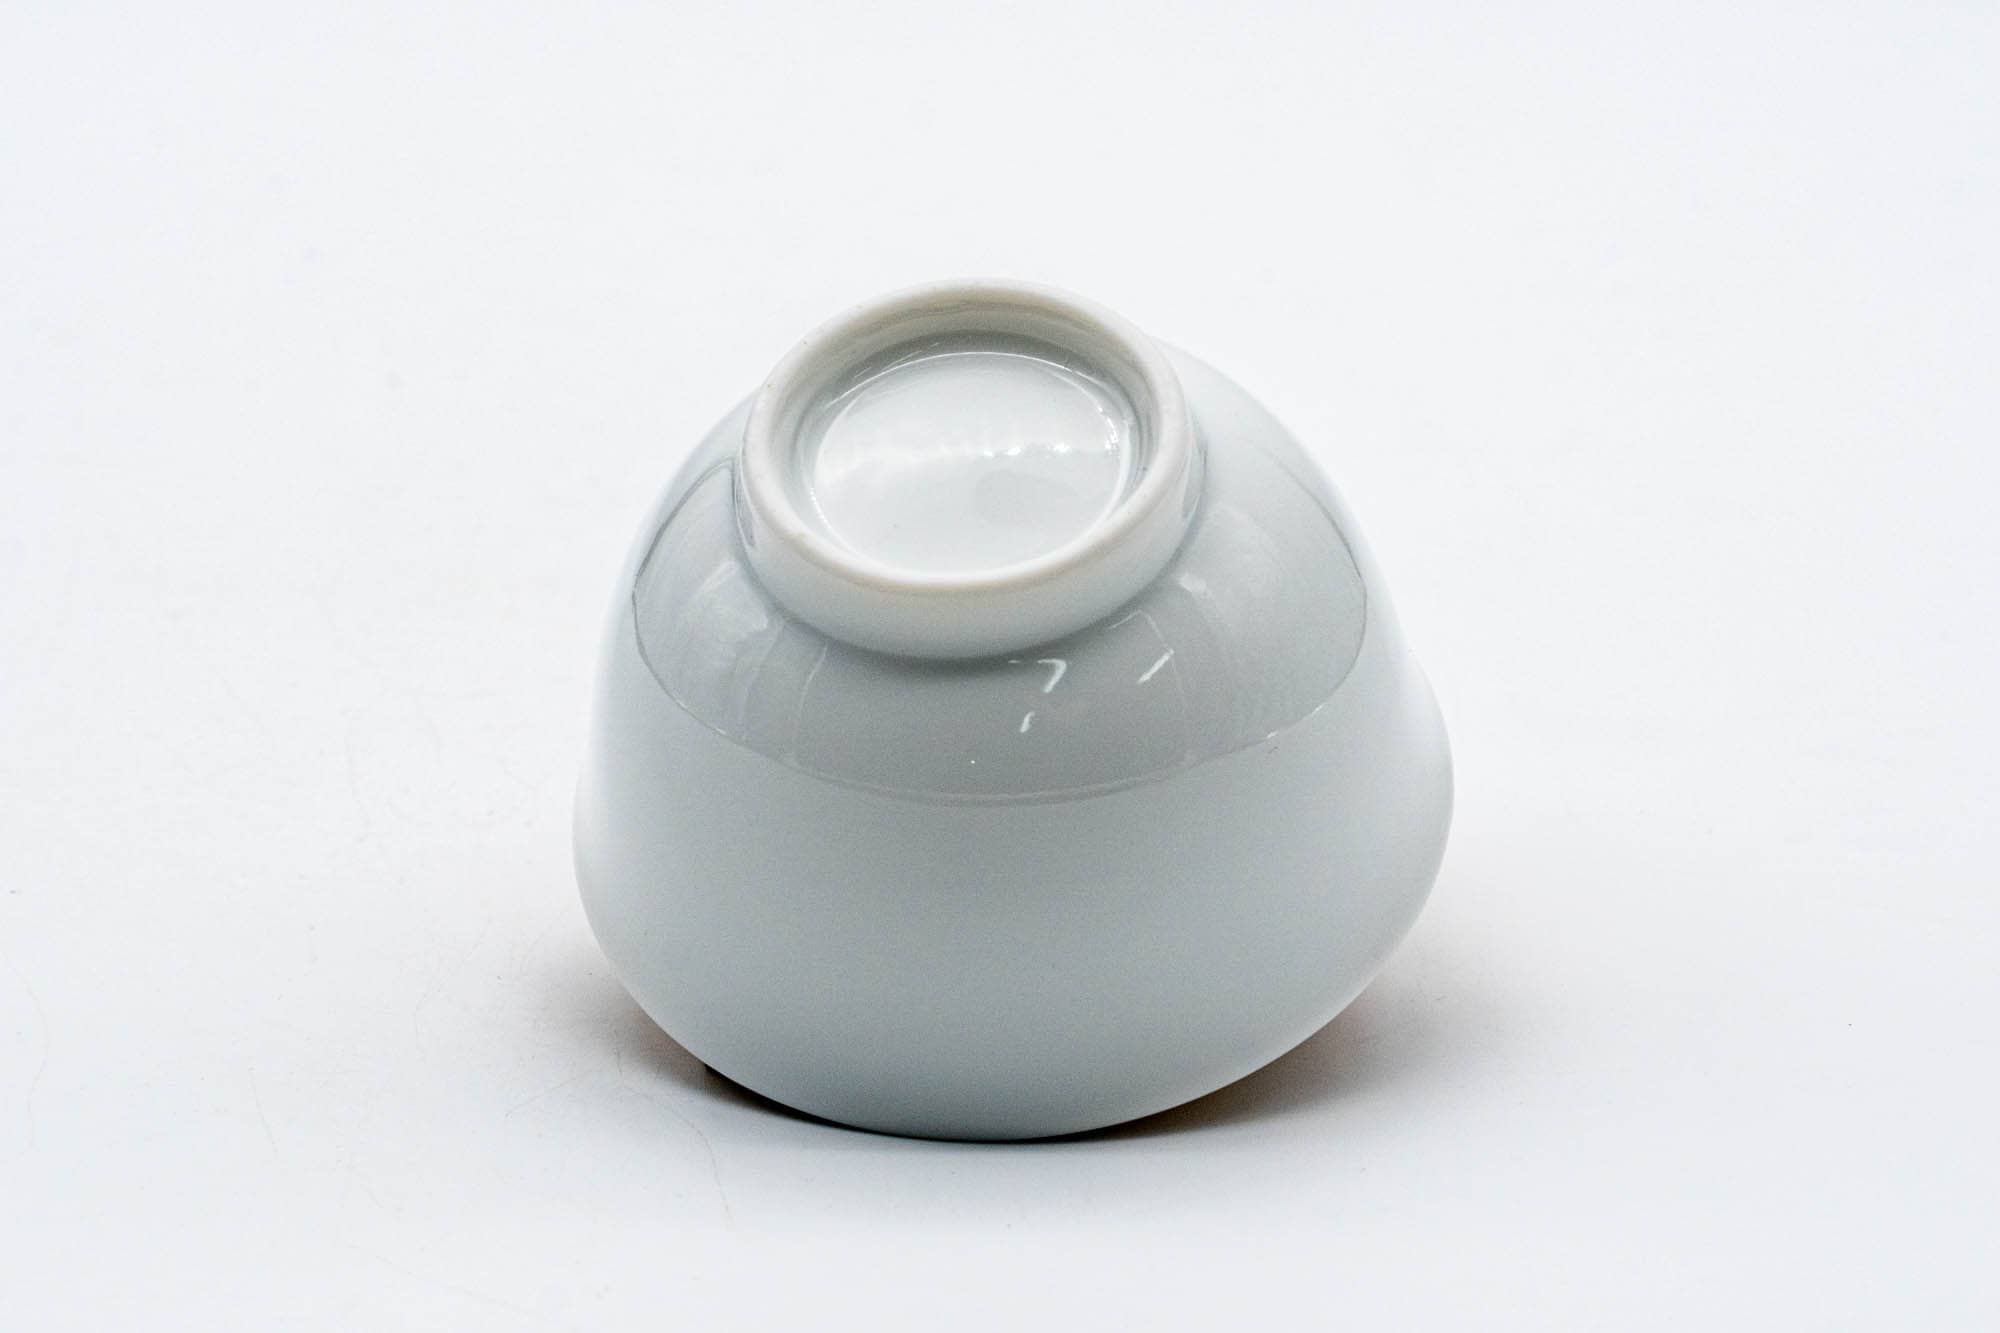 Japanese Tea Set - 北龍 Hokuryu - Shudashi Kokudei Tokoname-yaki Teapot with 5 Porcelain Teacups